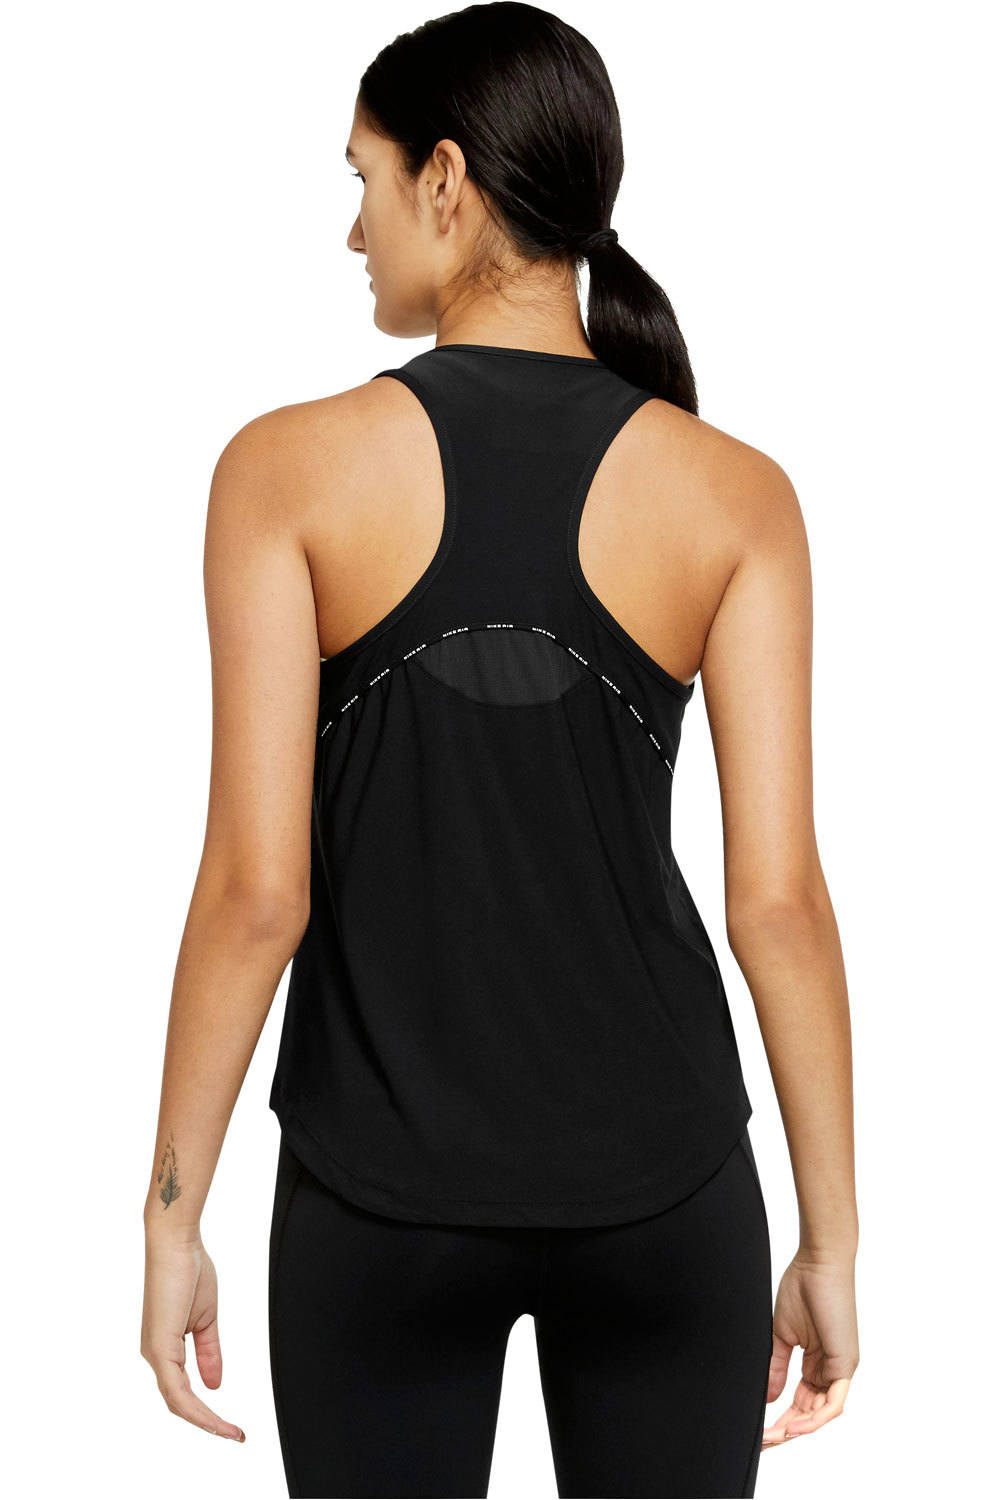 Nike camiseta técnica tirantes mujer DF AIR TANK vista trasera